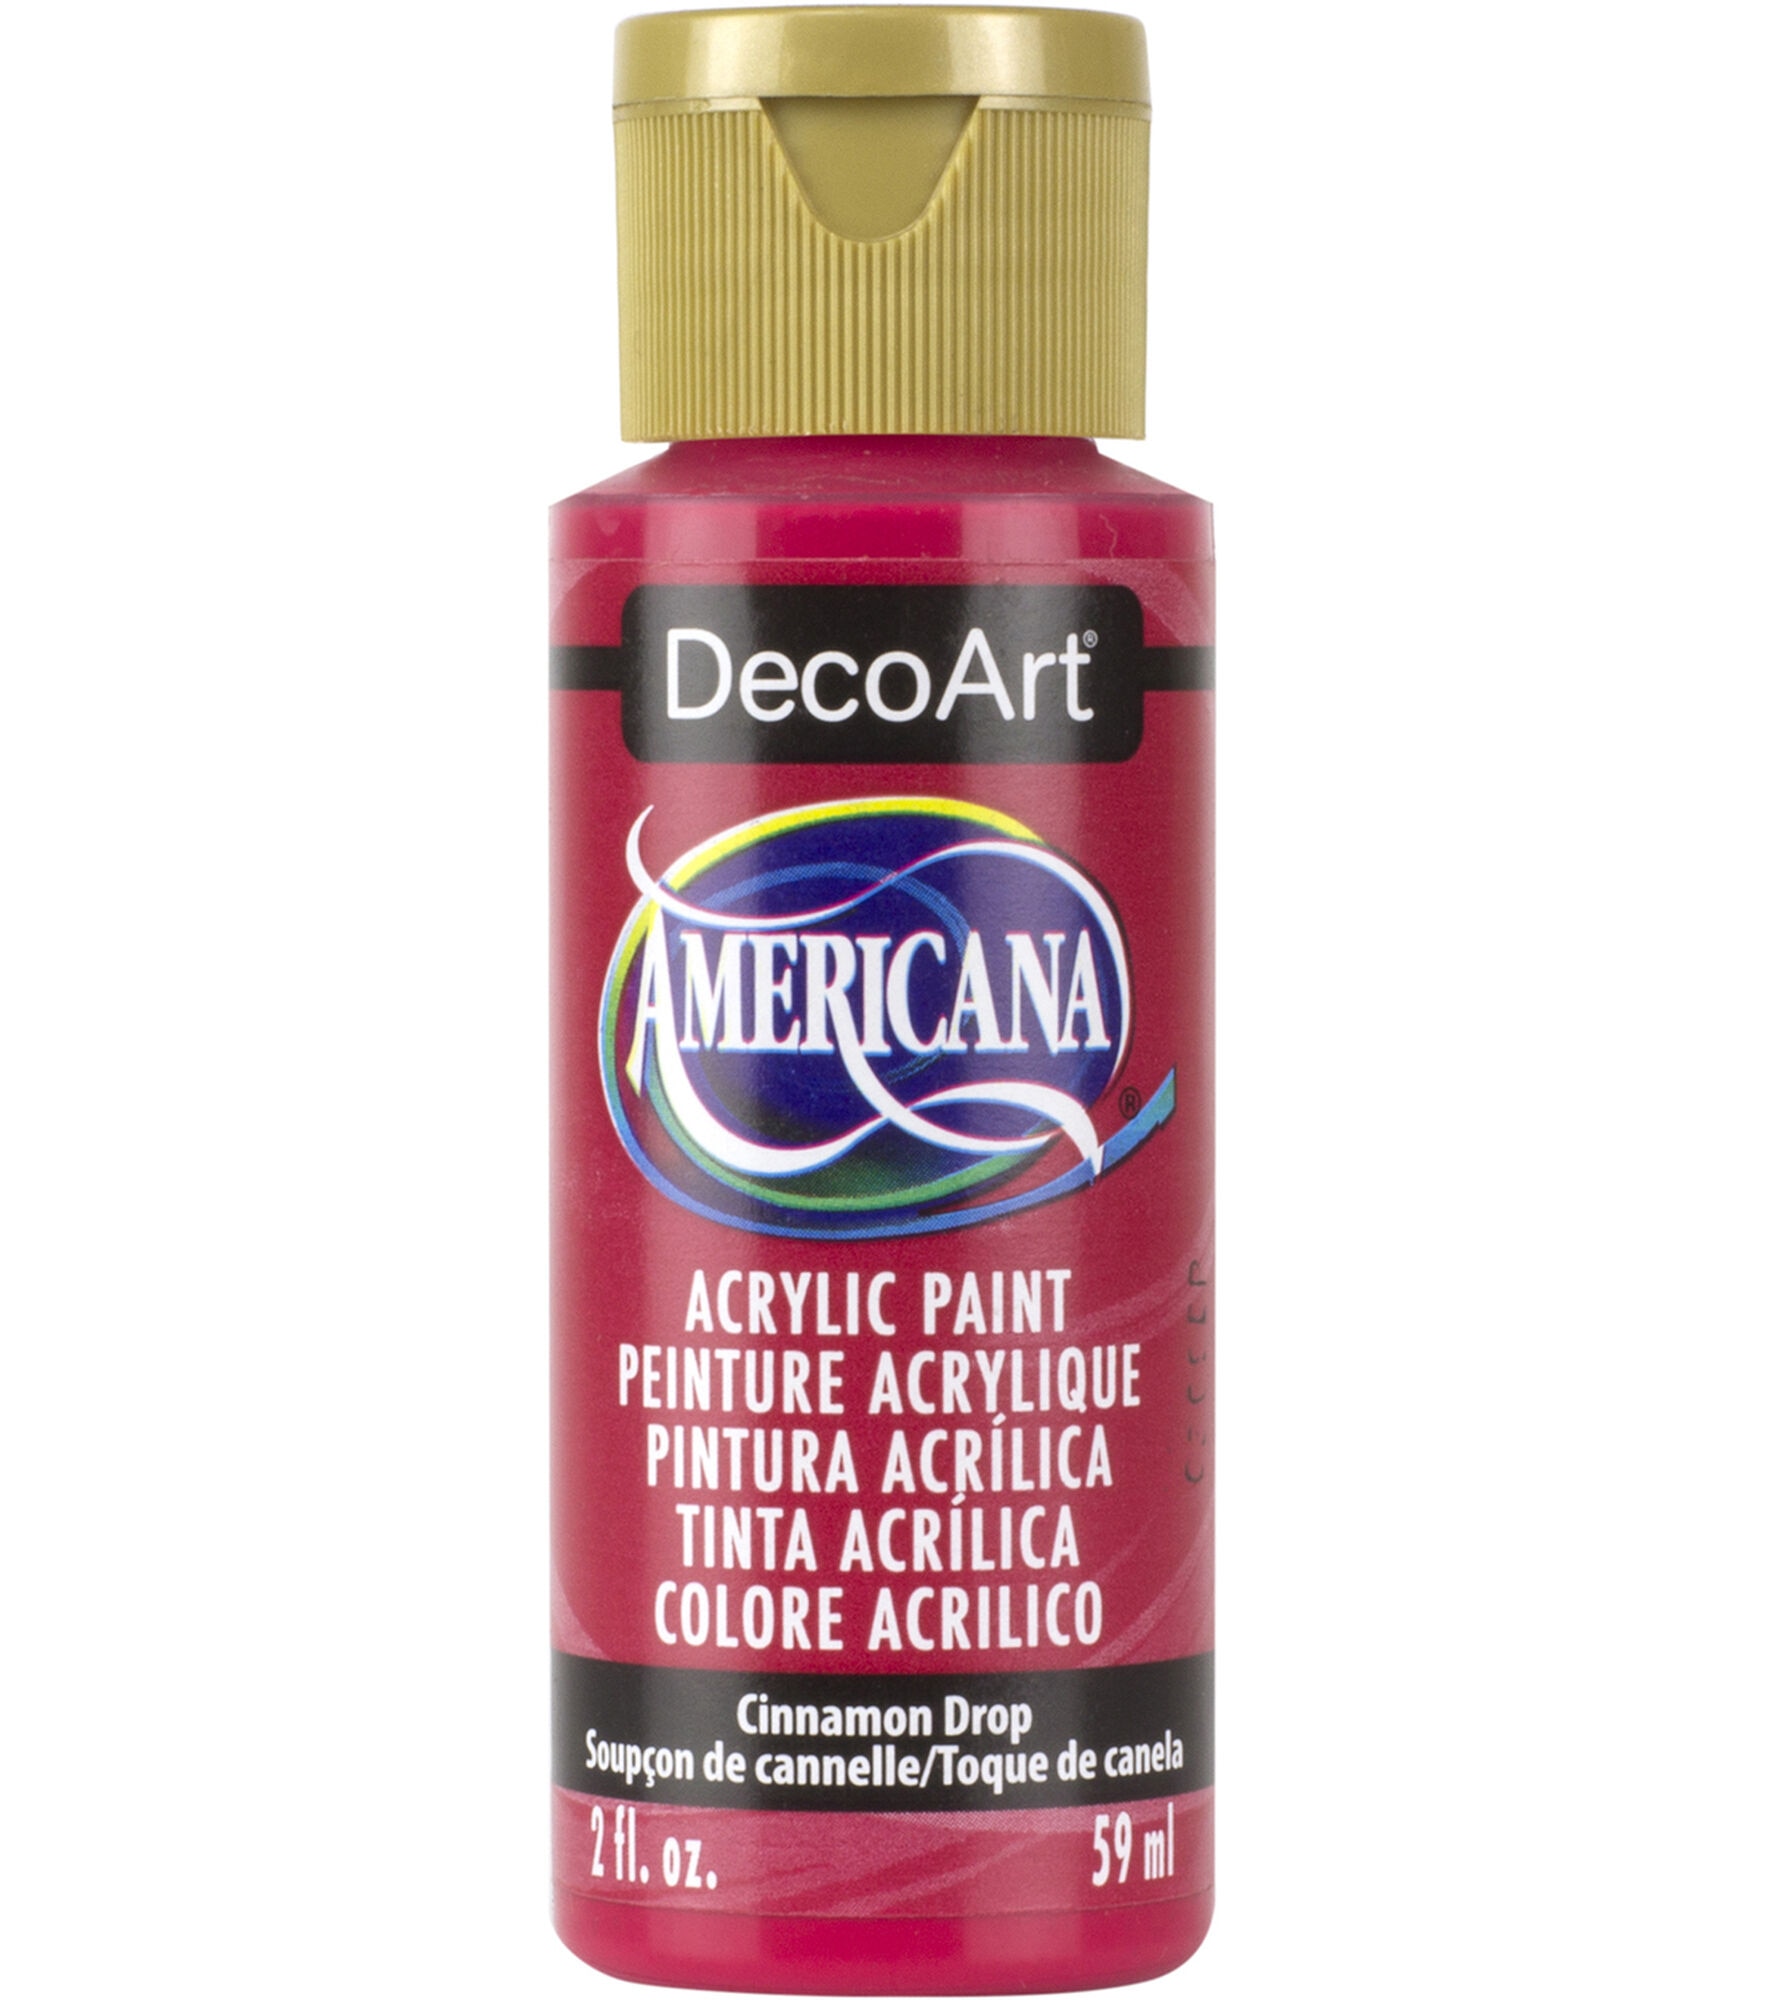 DecoArt Americana Acrylic 2oz Paint, Cinnamon Drop, hi-res